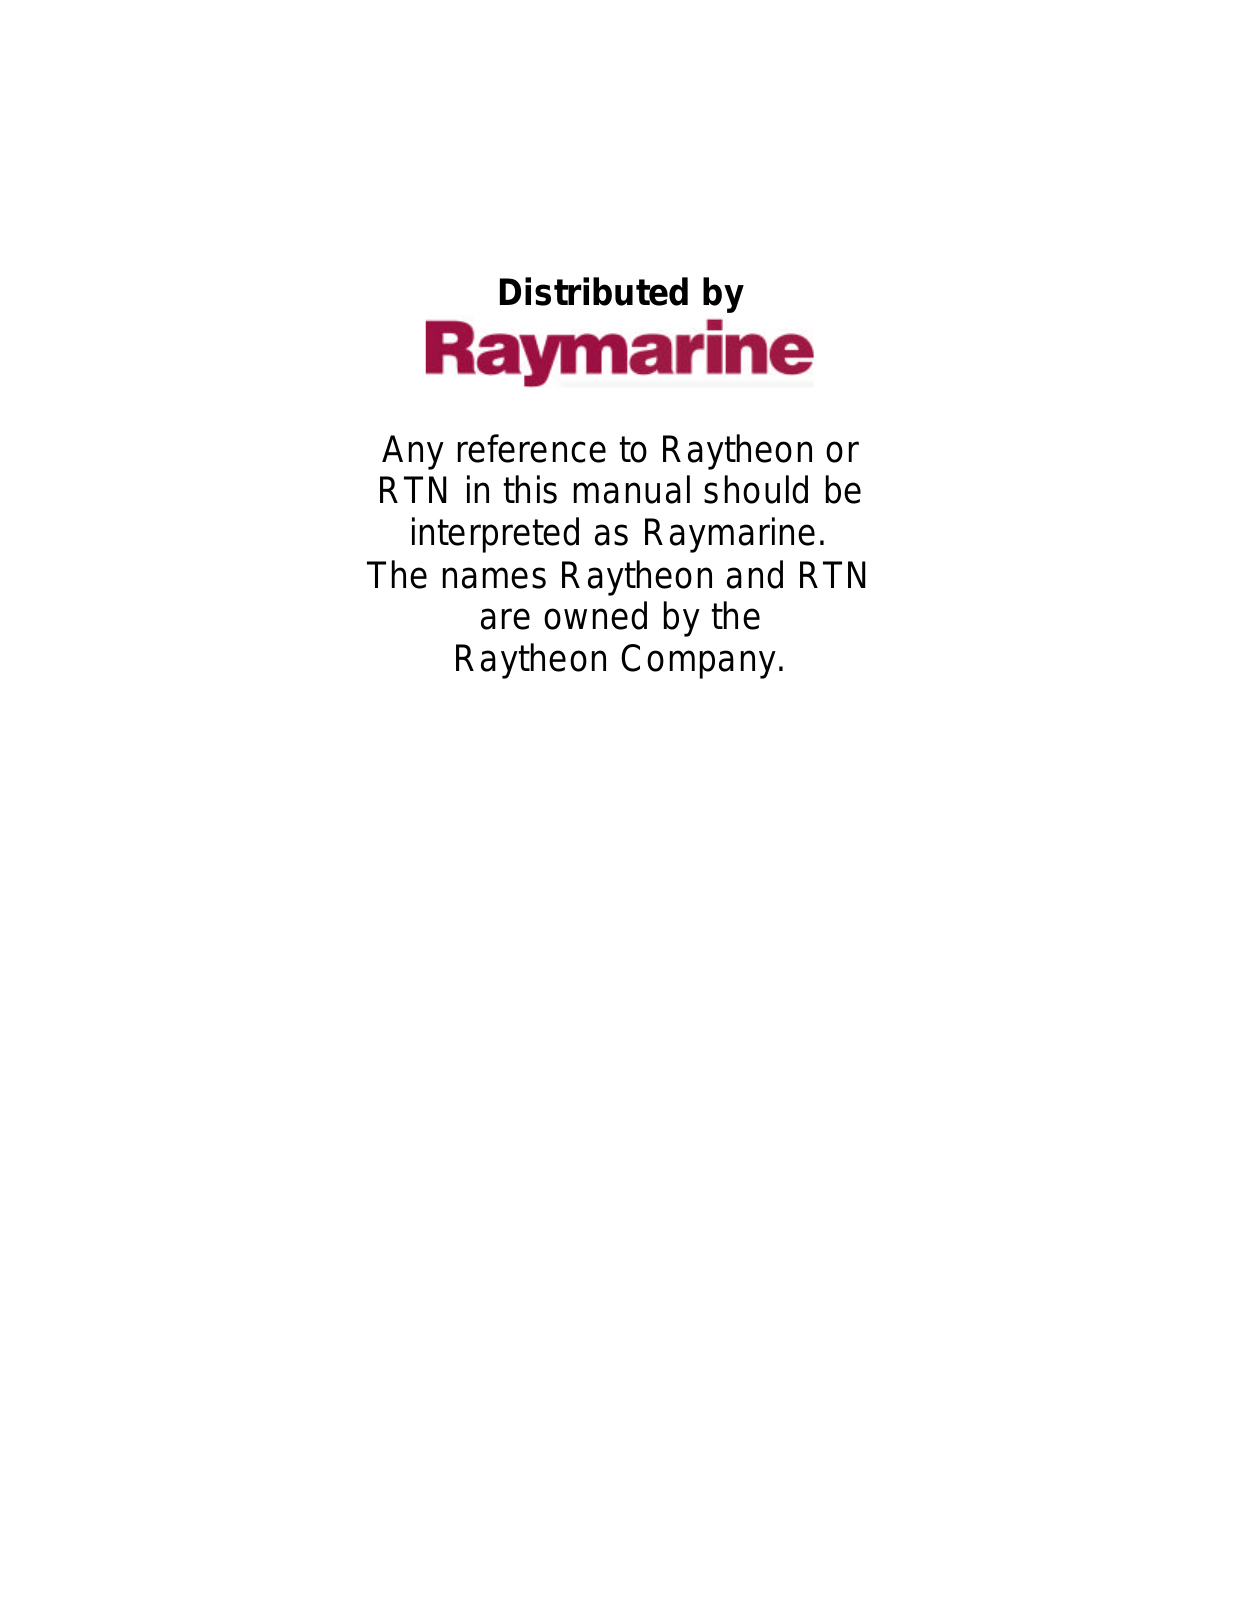 Raymarine APELCO DXL-6350 Manual